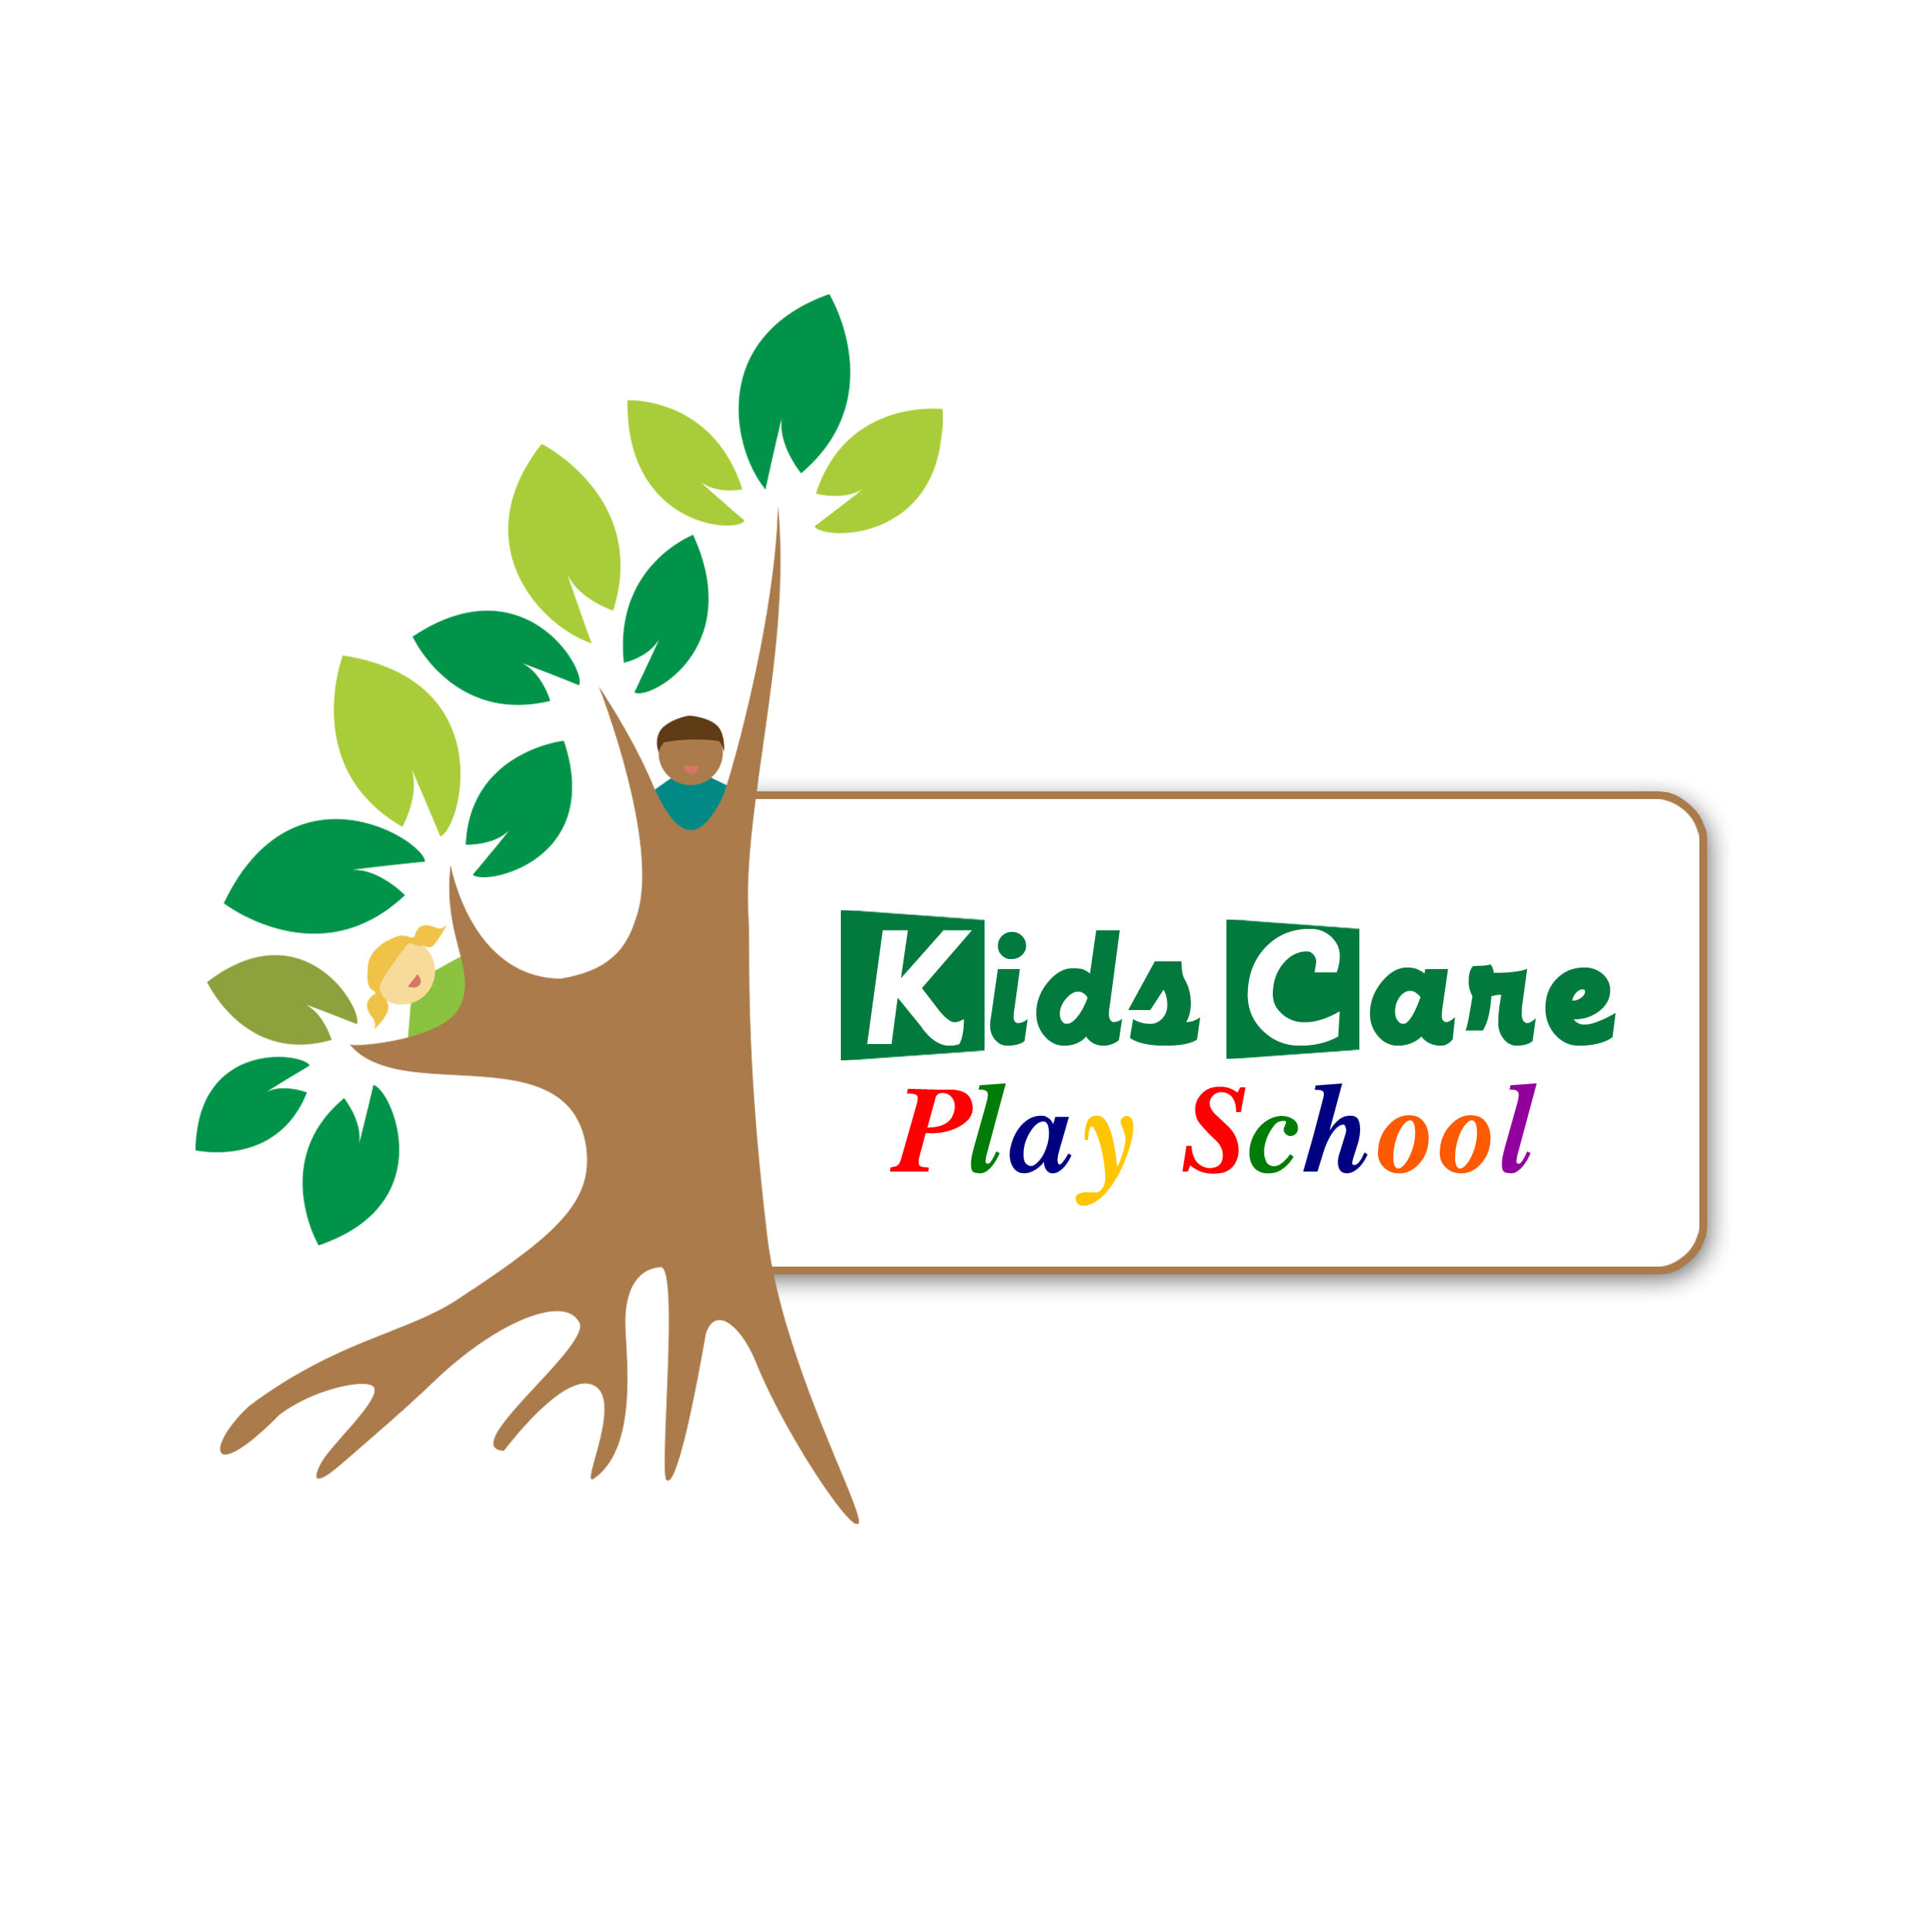 Kids Care Play School